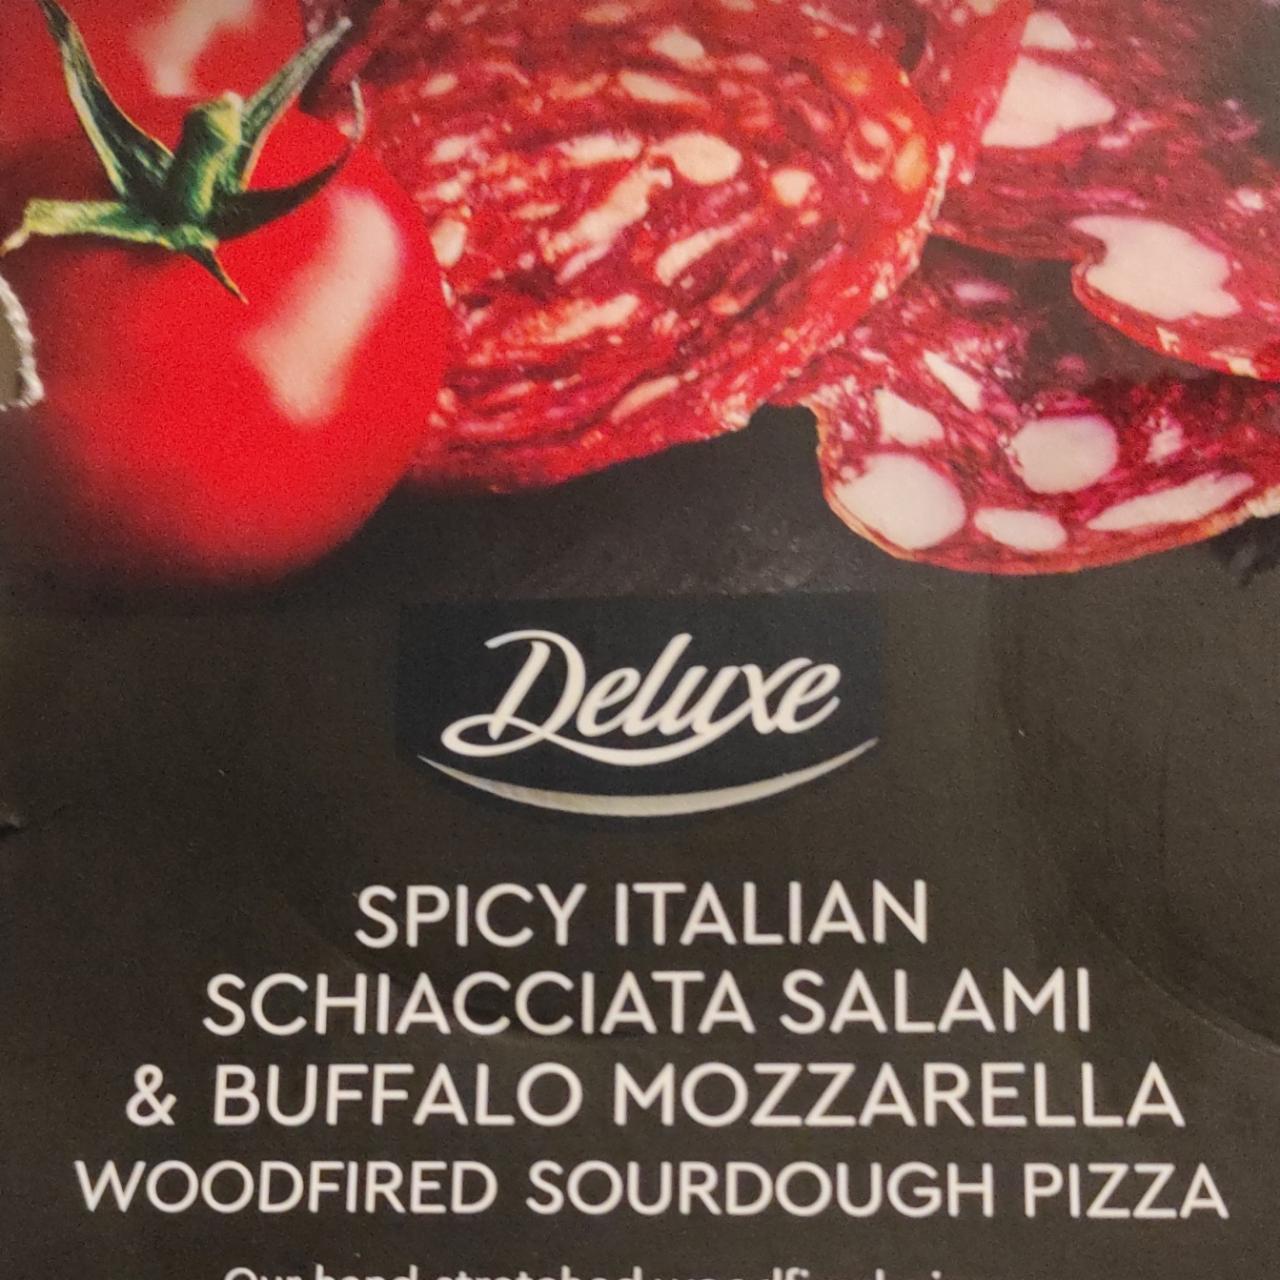 Fotografie - Spicy Italian Schiacciata Salami & Buffalo Mozzarella Woodfired Sourdough Pizza Deluxe